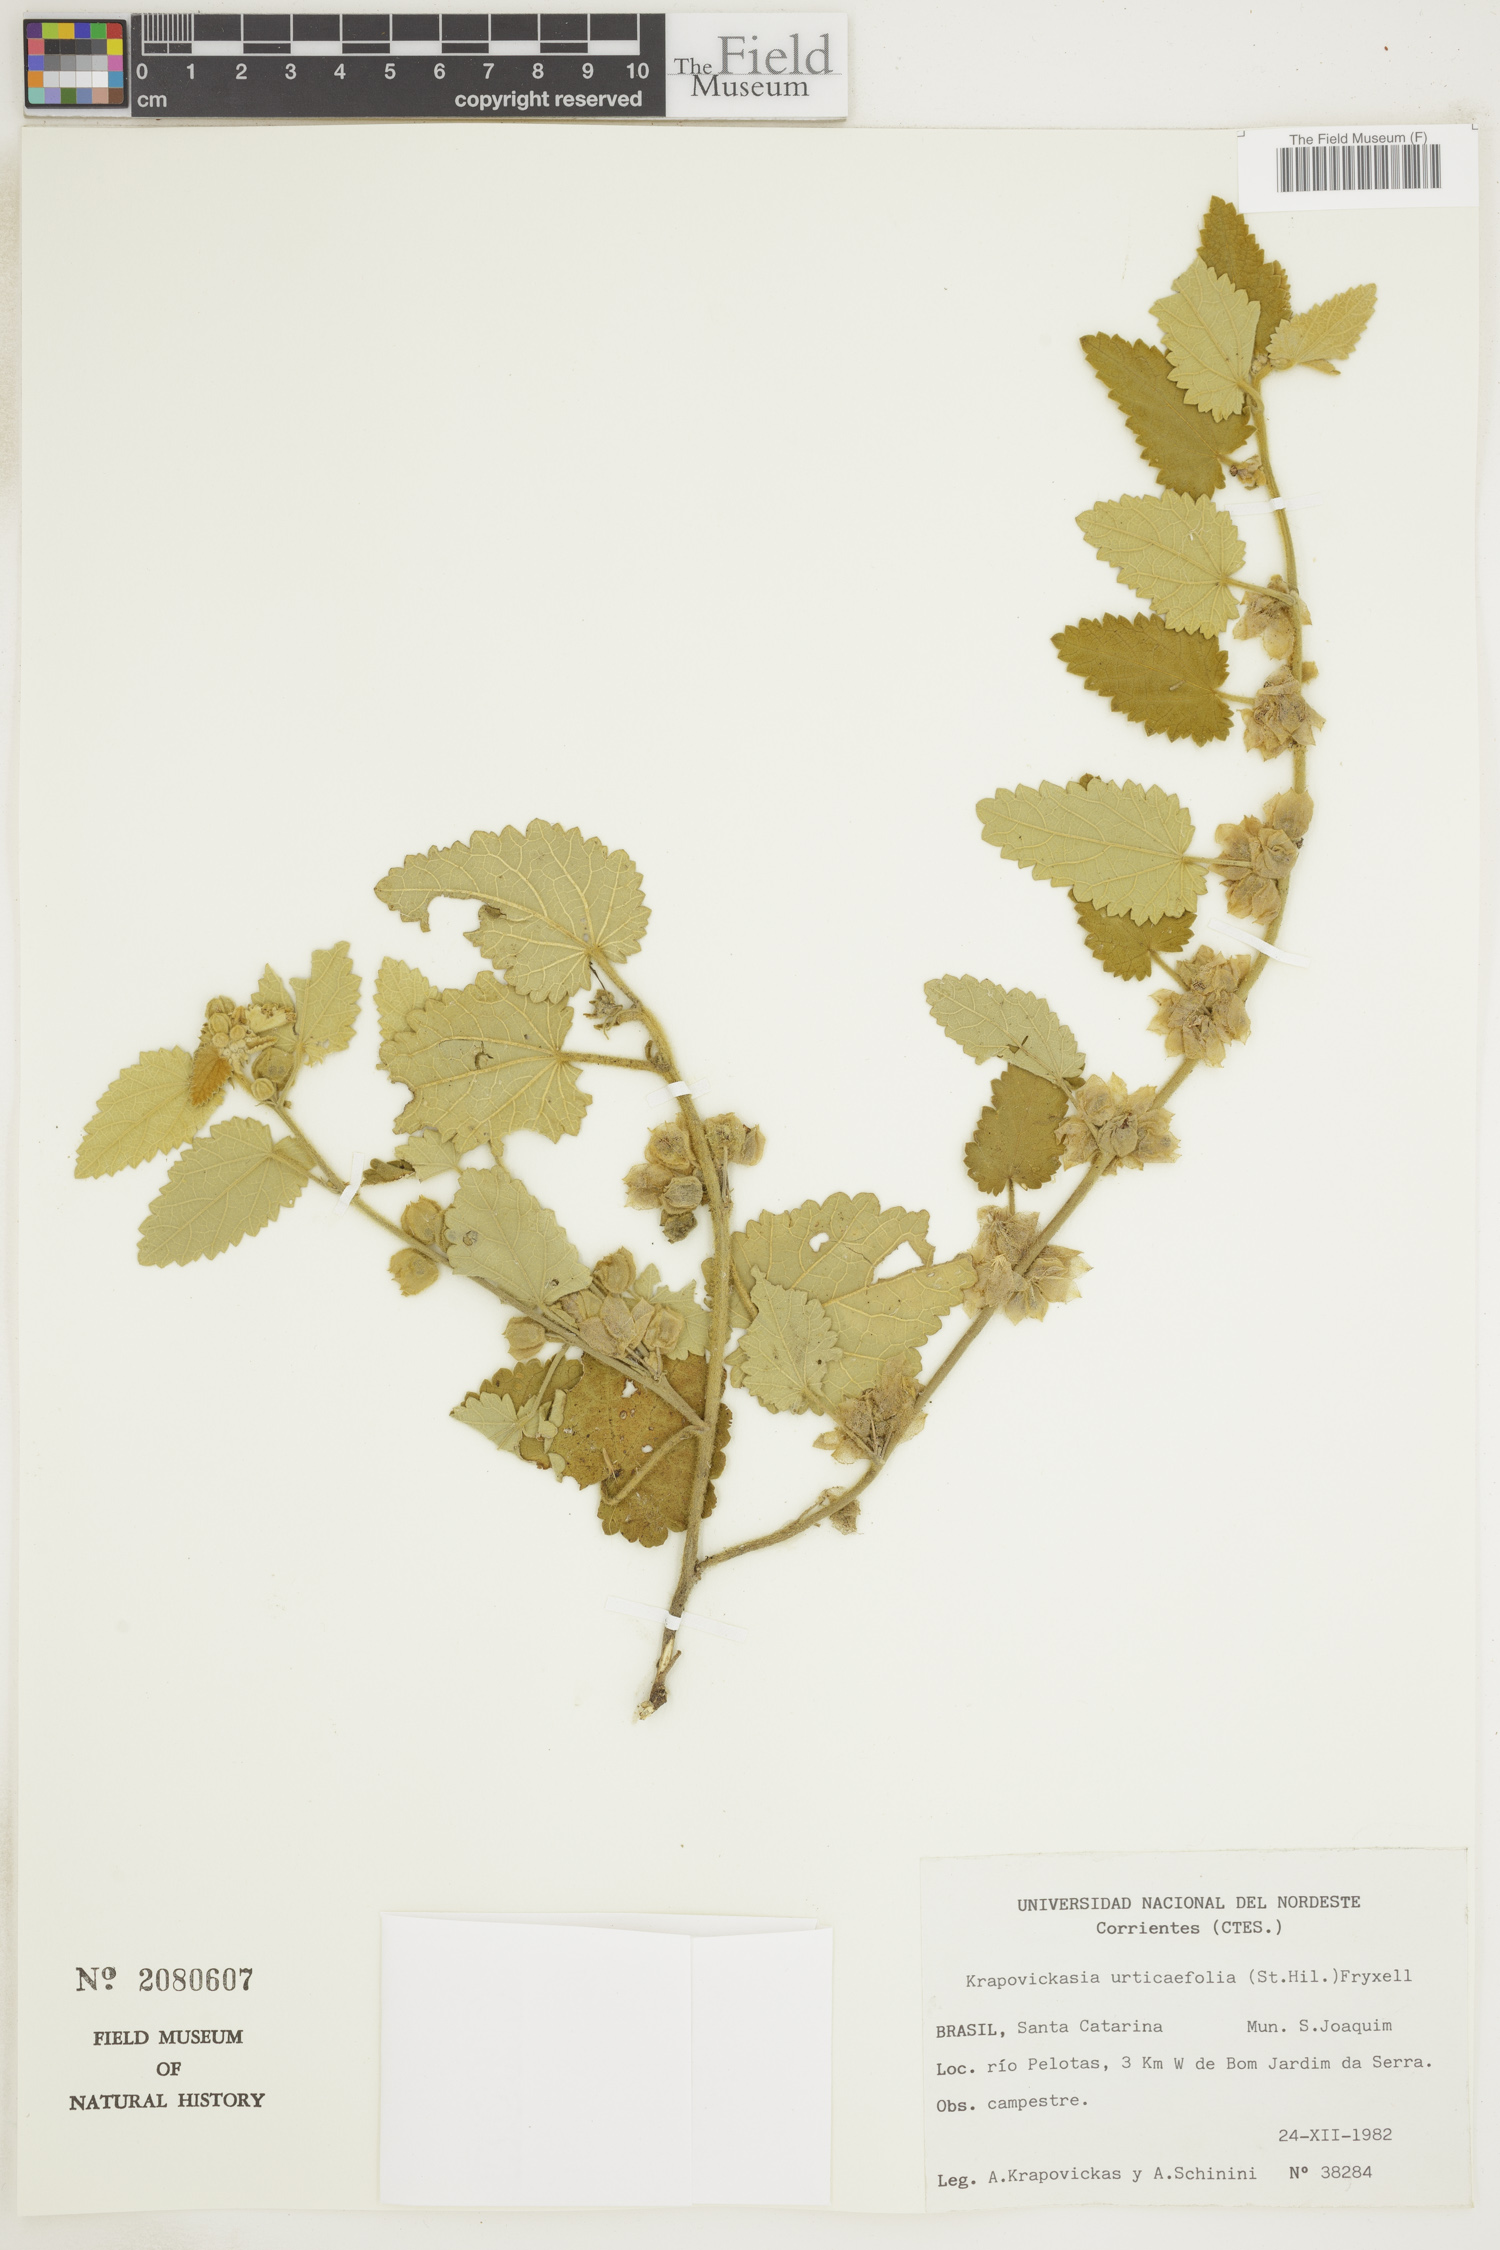 Krapovickasia urticifolia image